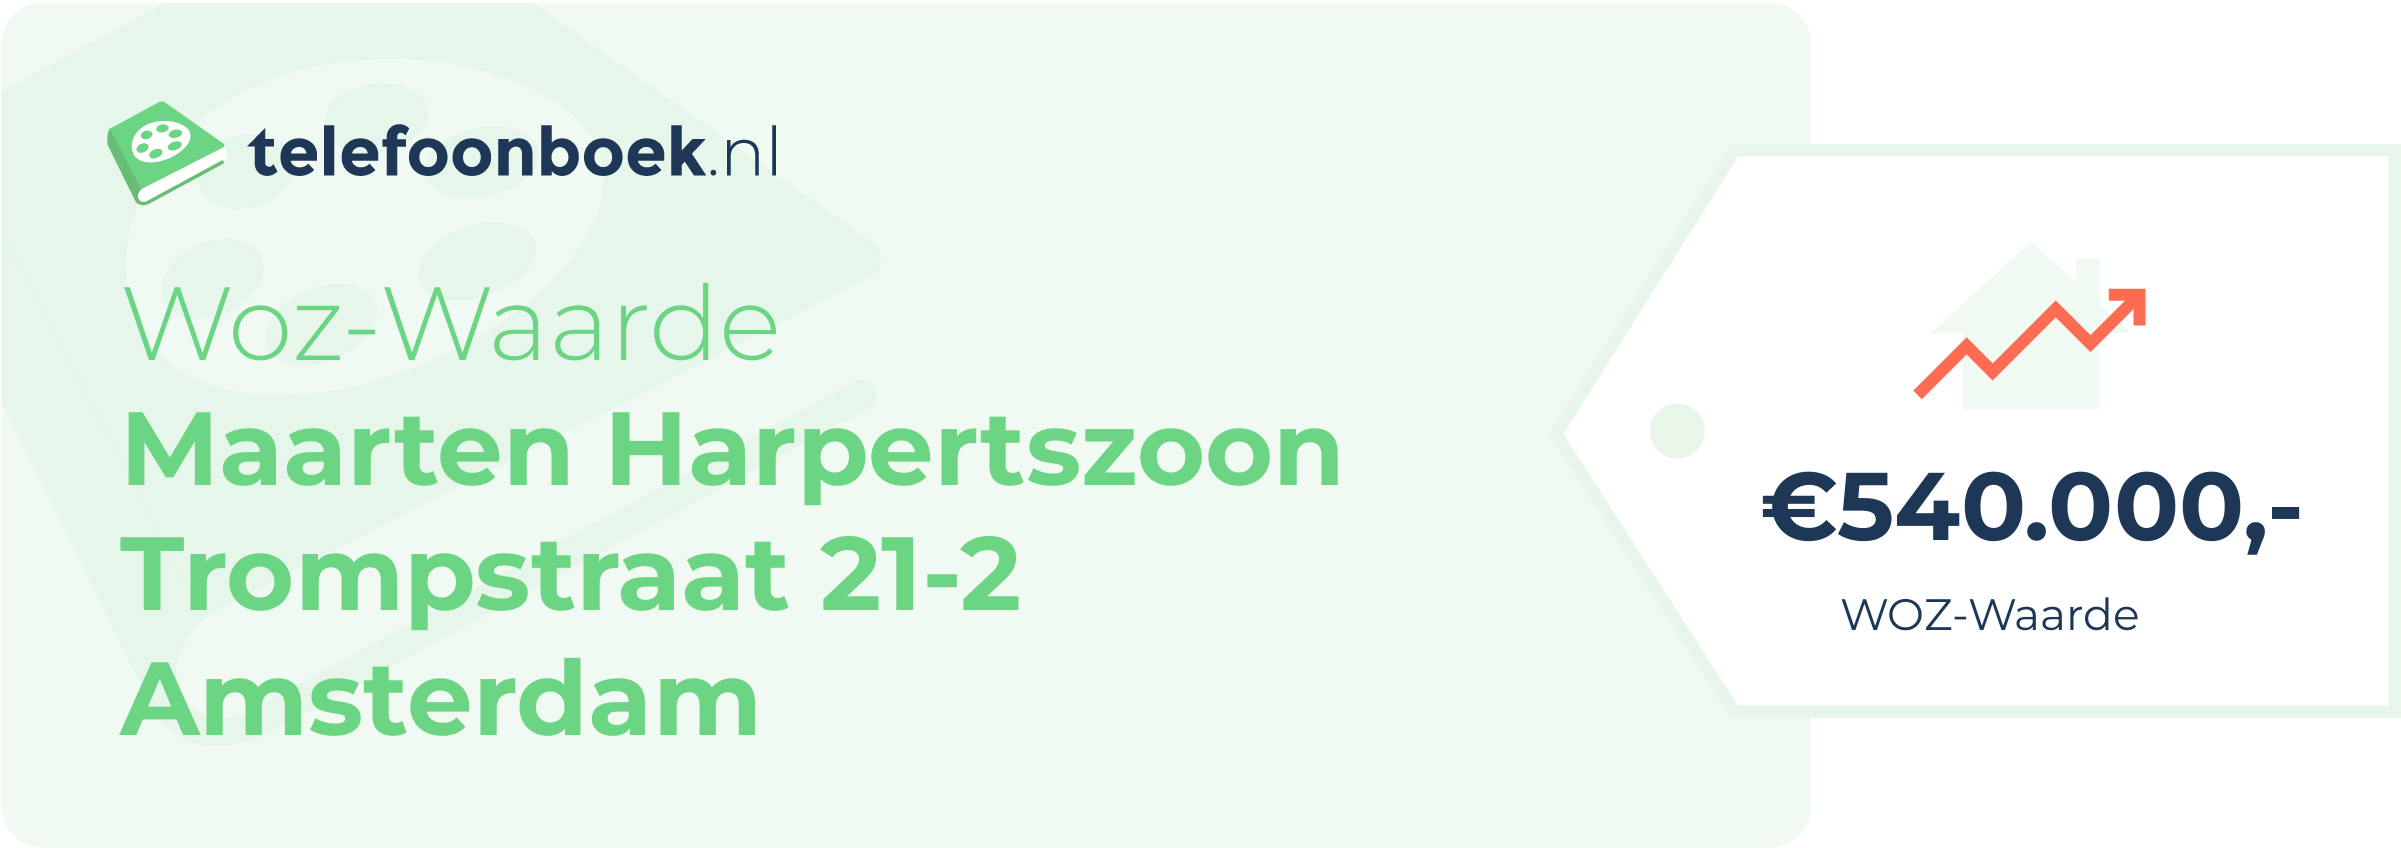 WOZ-waarde Maarten Harpertszoon Trompstraat 21-2 Amsterdam